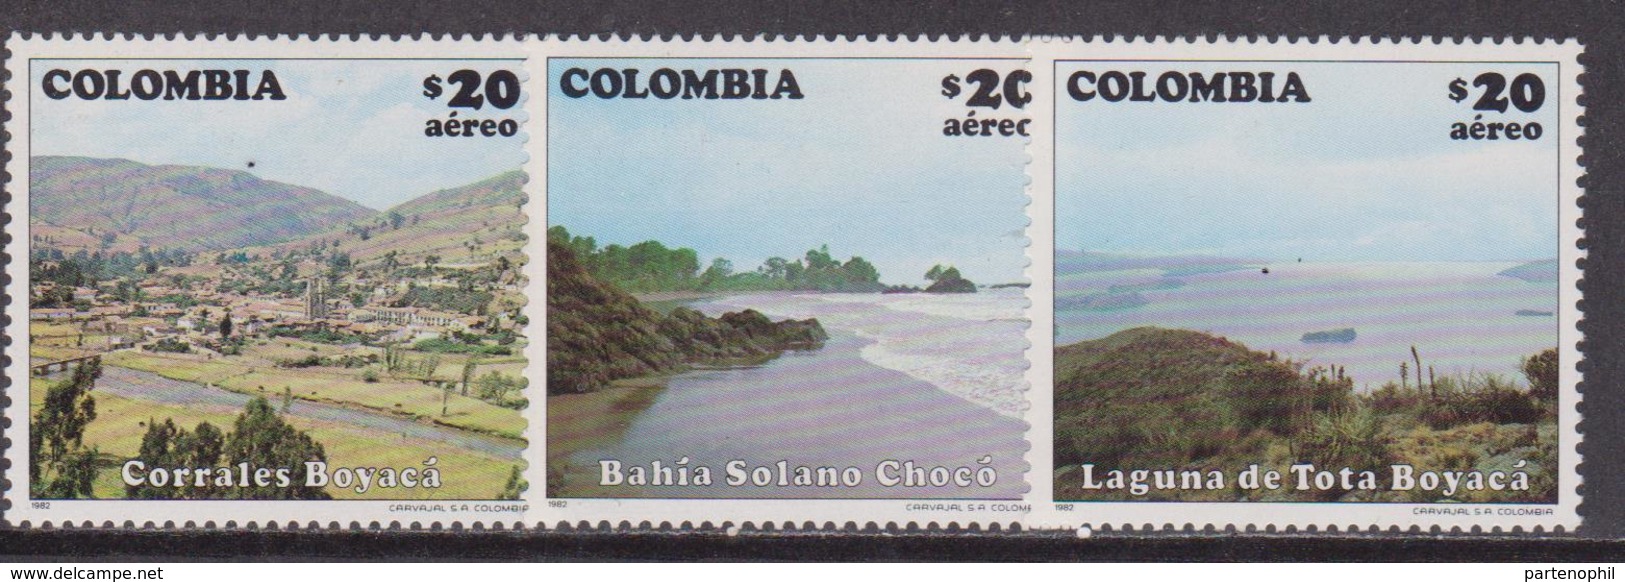 Colombia Landscape Set MNH - Colombia